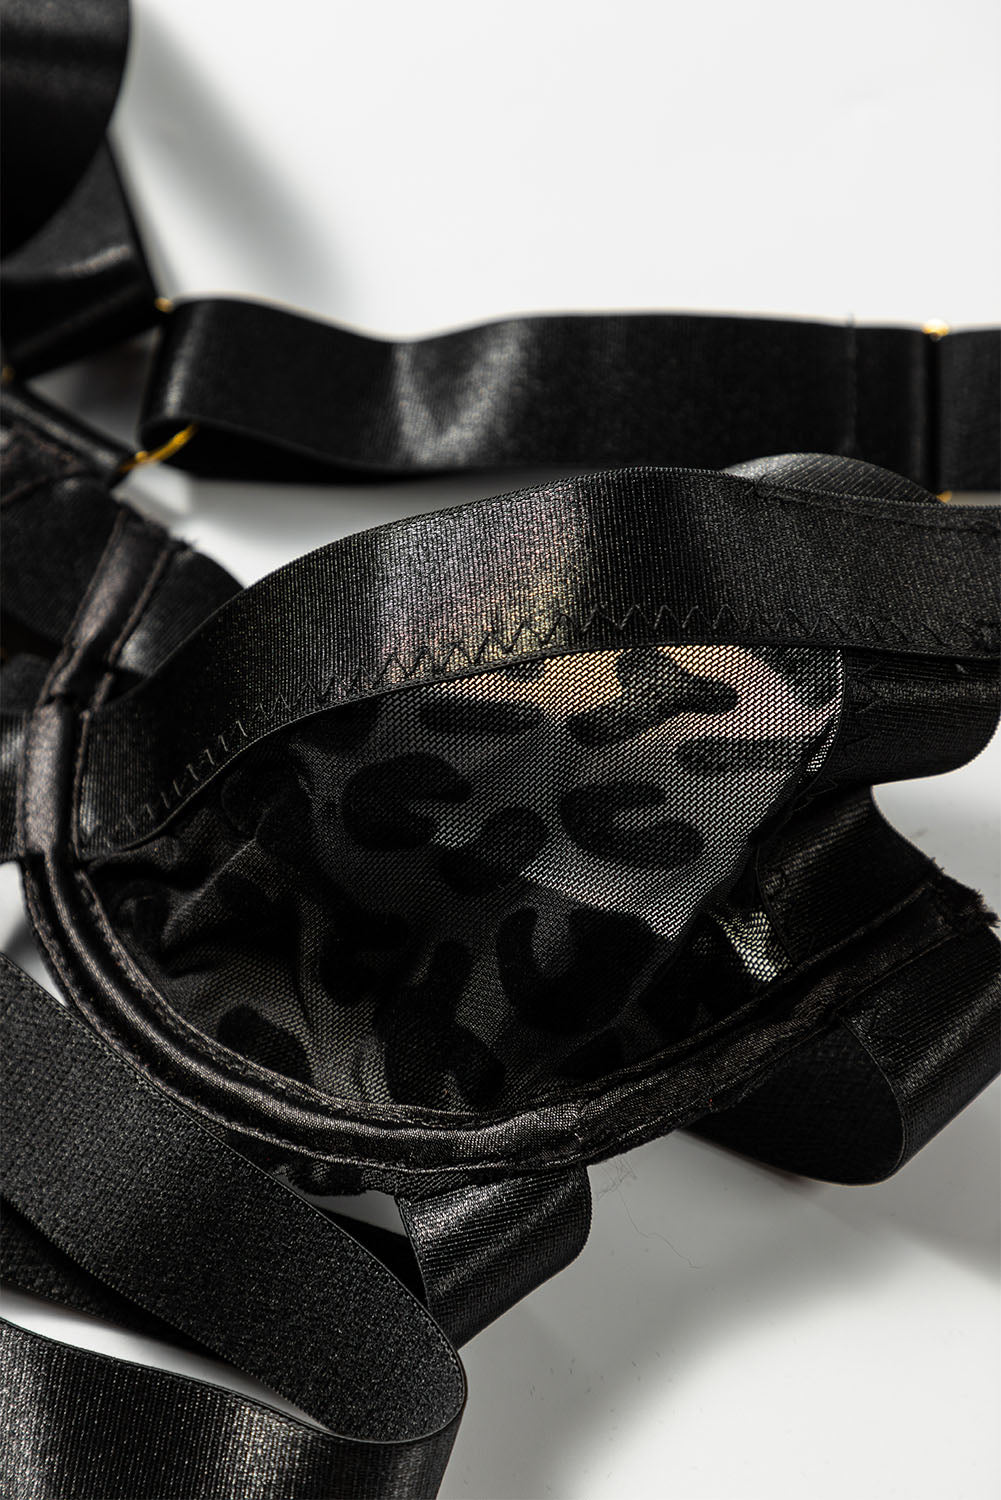 Black Strappy Caged Leopard Insert Teddy Lingerie Teddy Lingerie JT's Designer Fashion